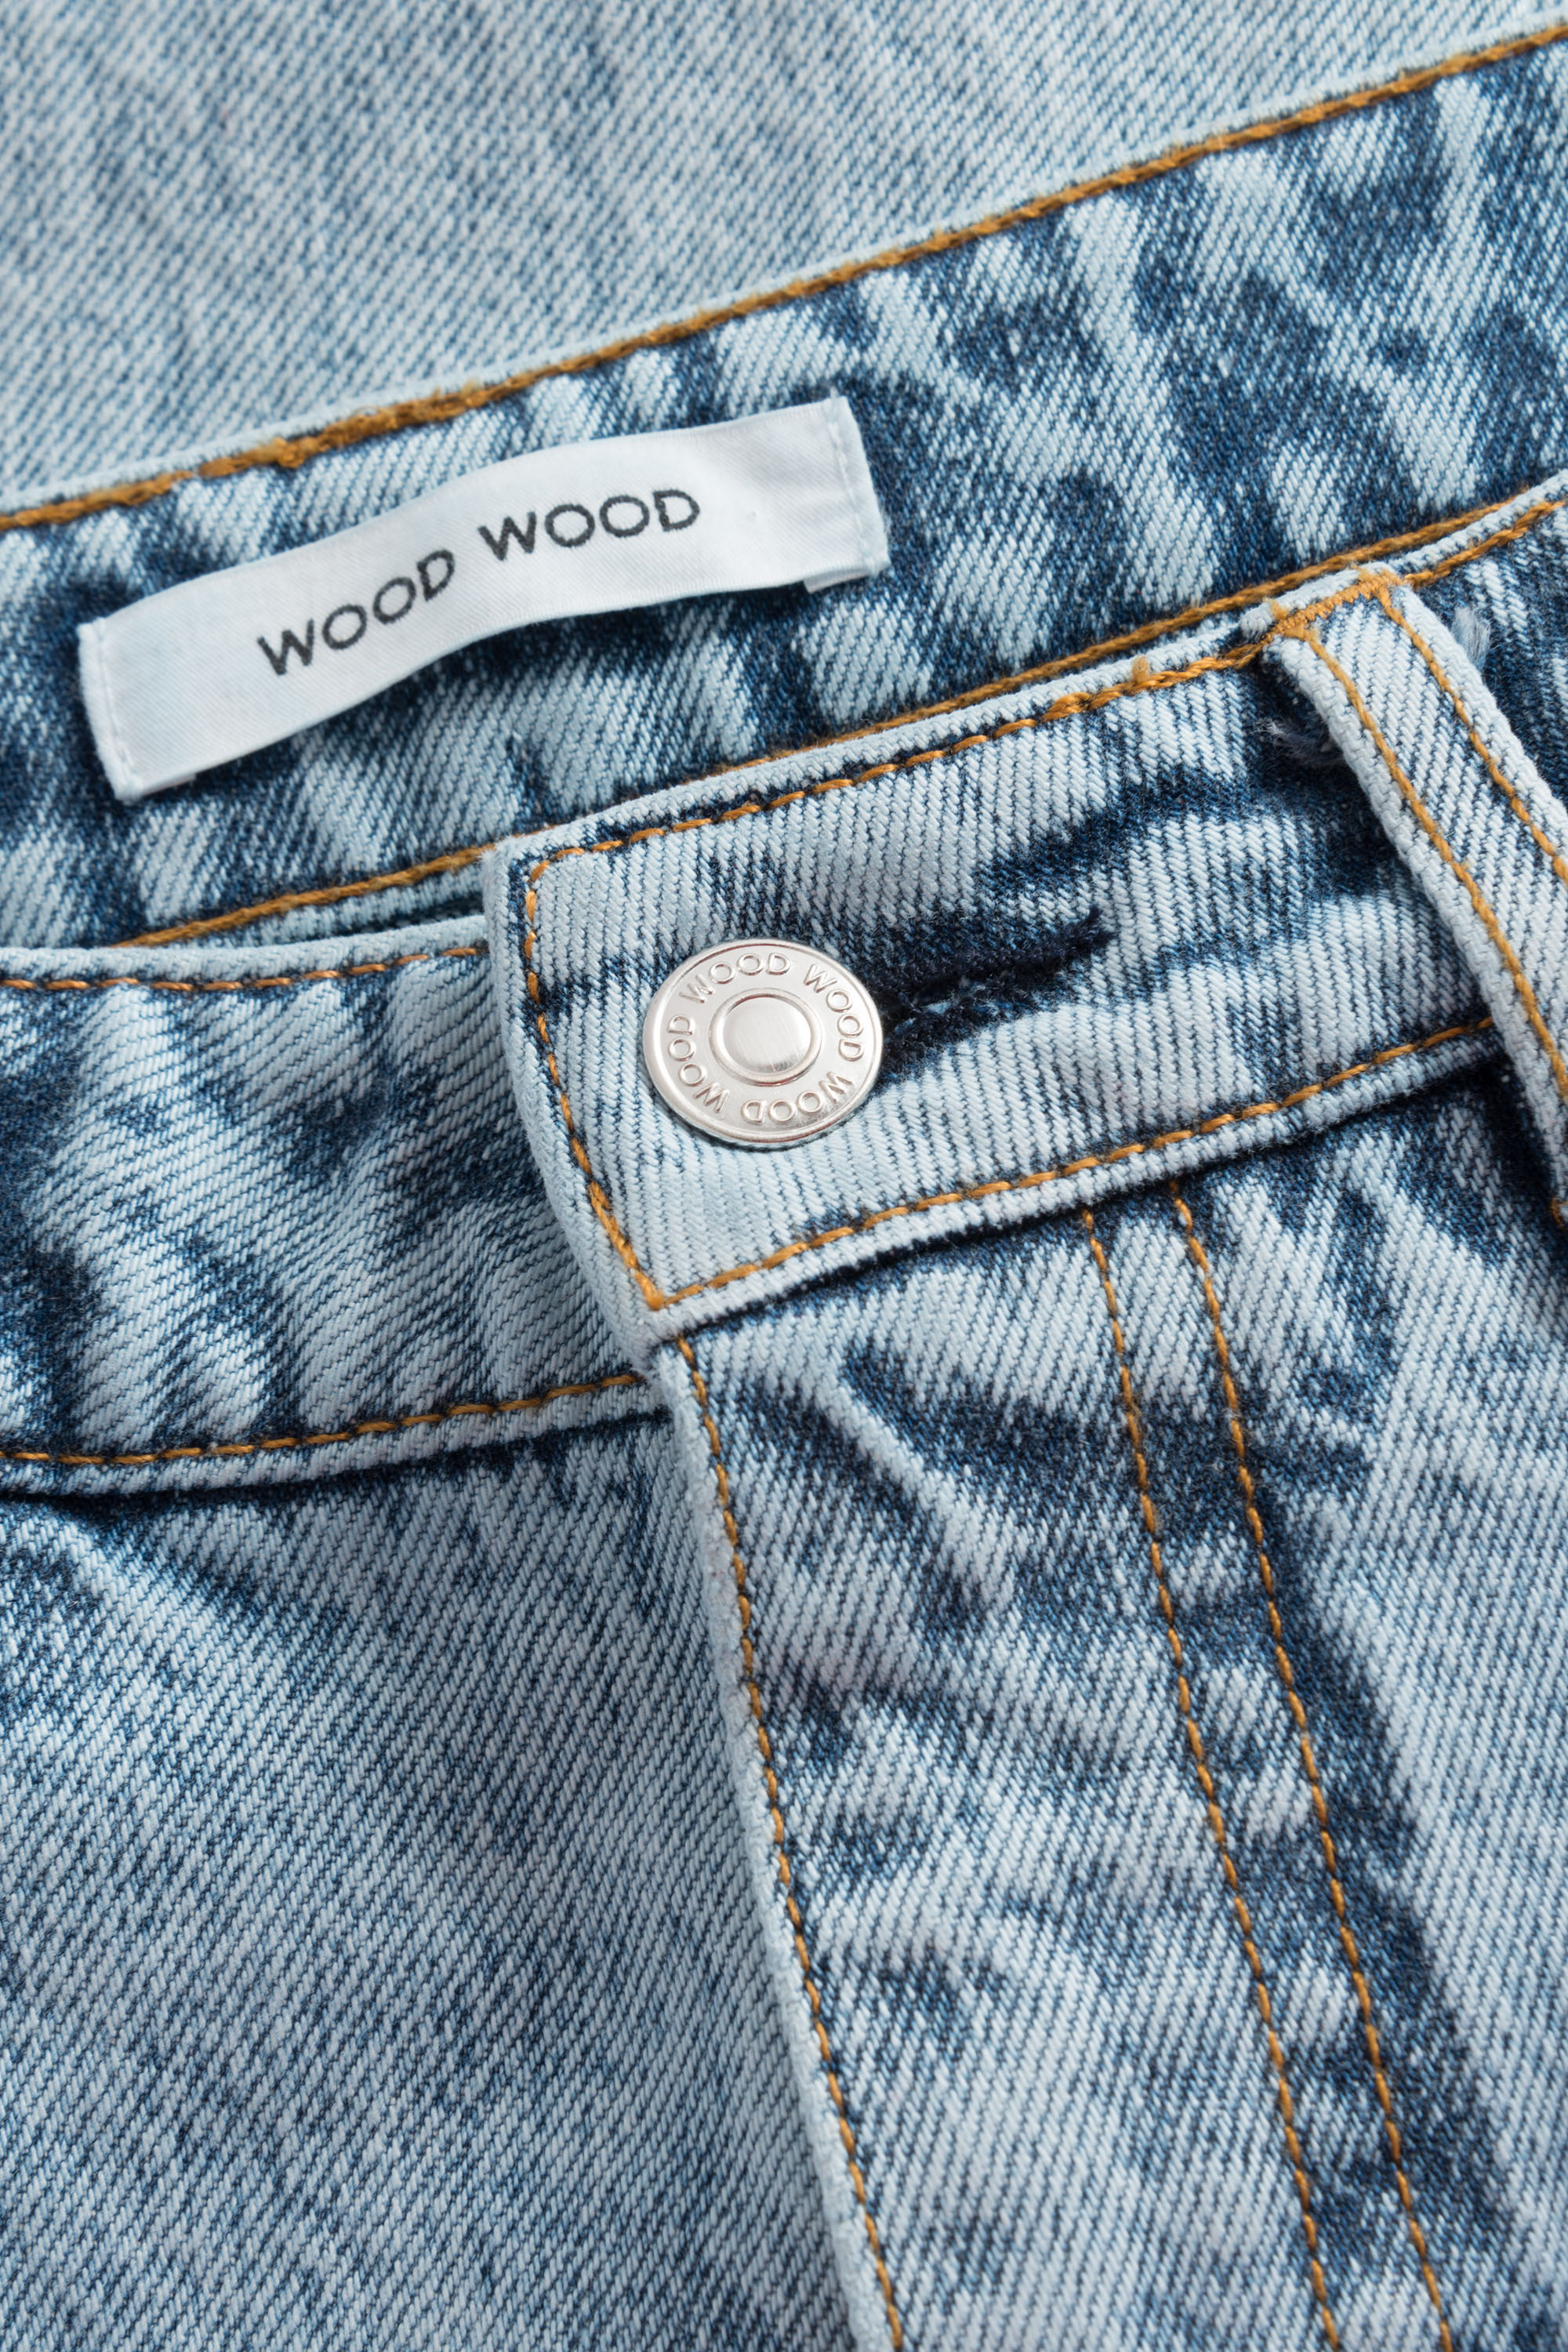 Wood Wood ウッドウッド Ilo jeans  クロップドデニムパンツ